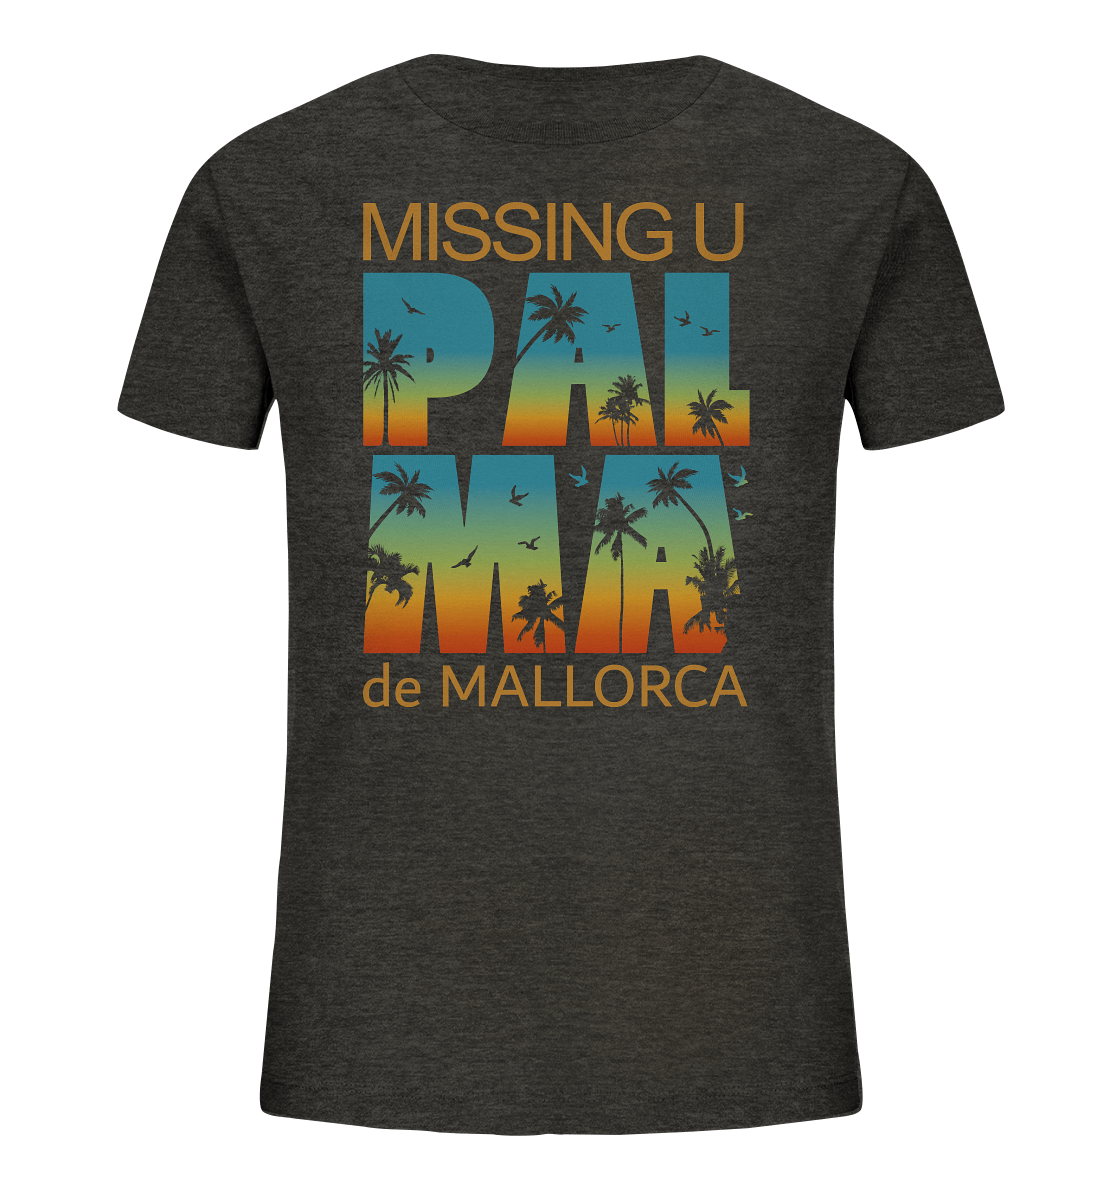 Missing Palma de Mallorca • Kids Organic Shirt